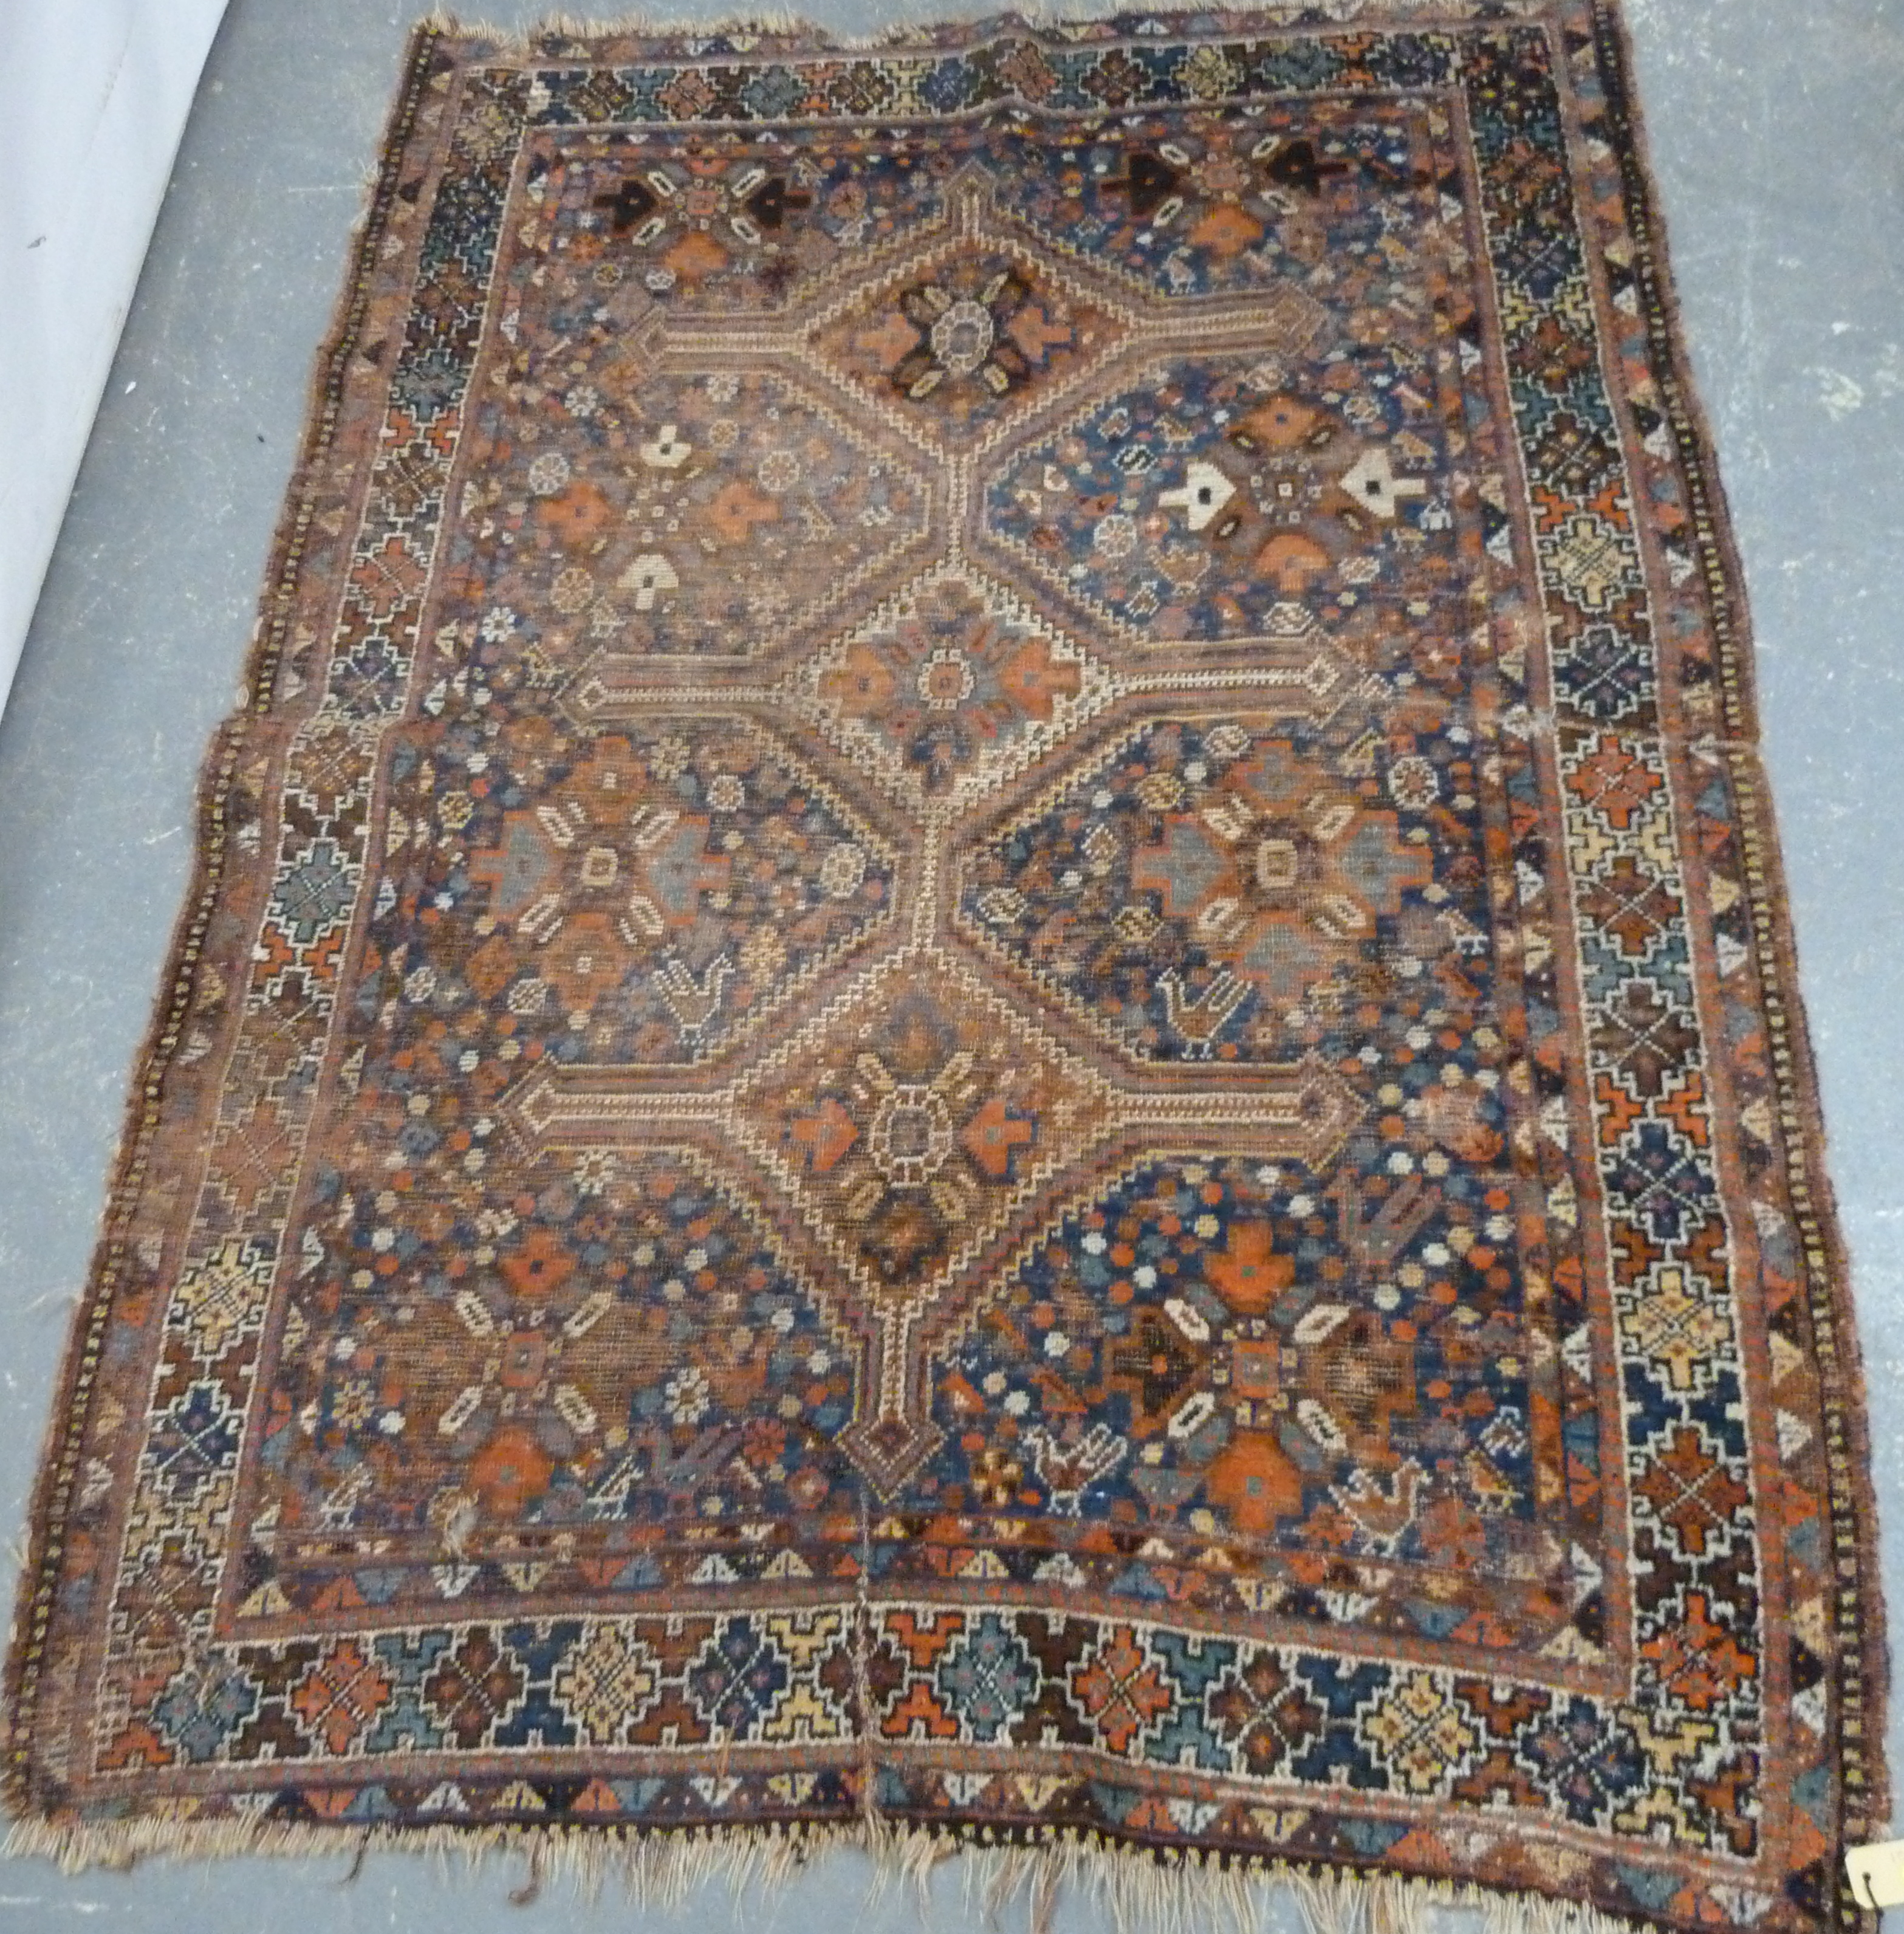 Persian wool rug with central triple diamond lozenge, some wear, 175cm x 130cm.